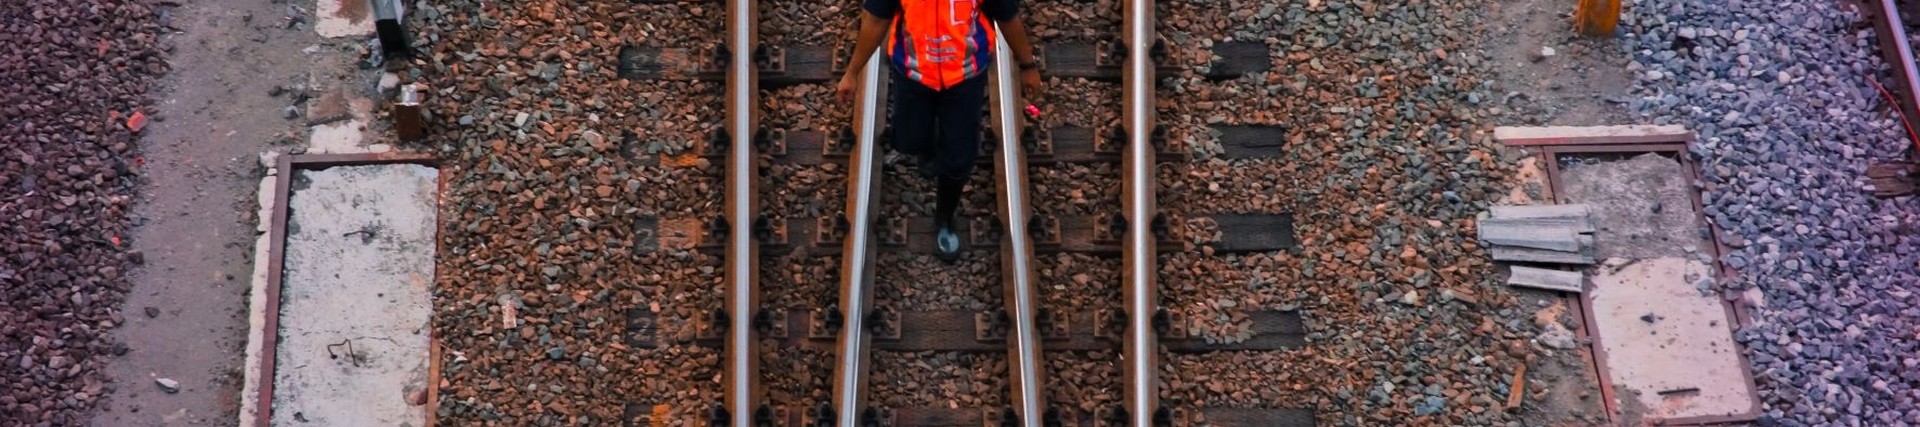 Rail worker on train tracks